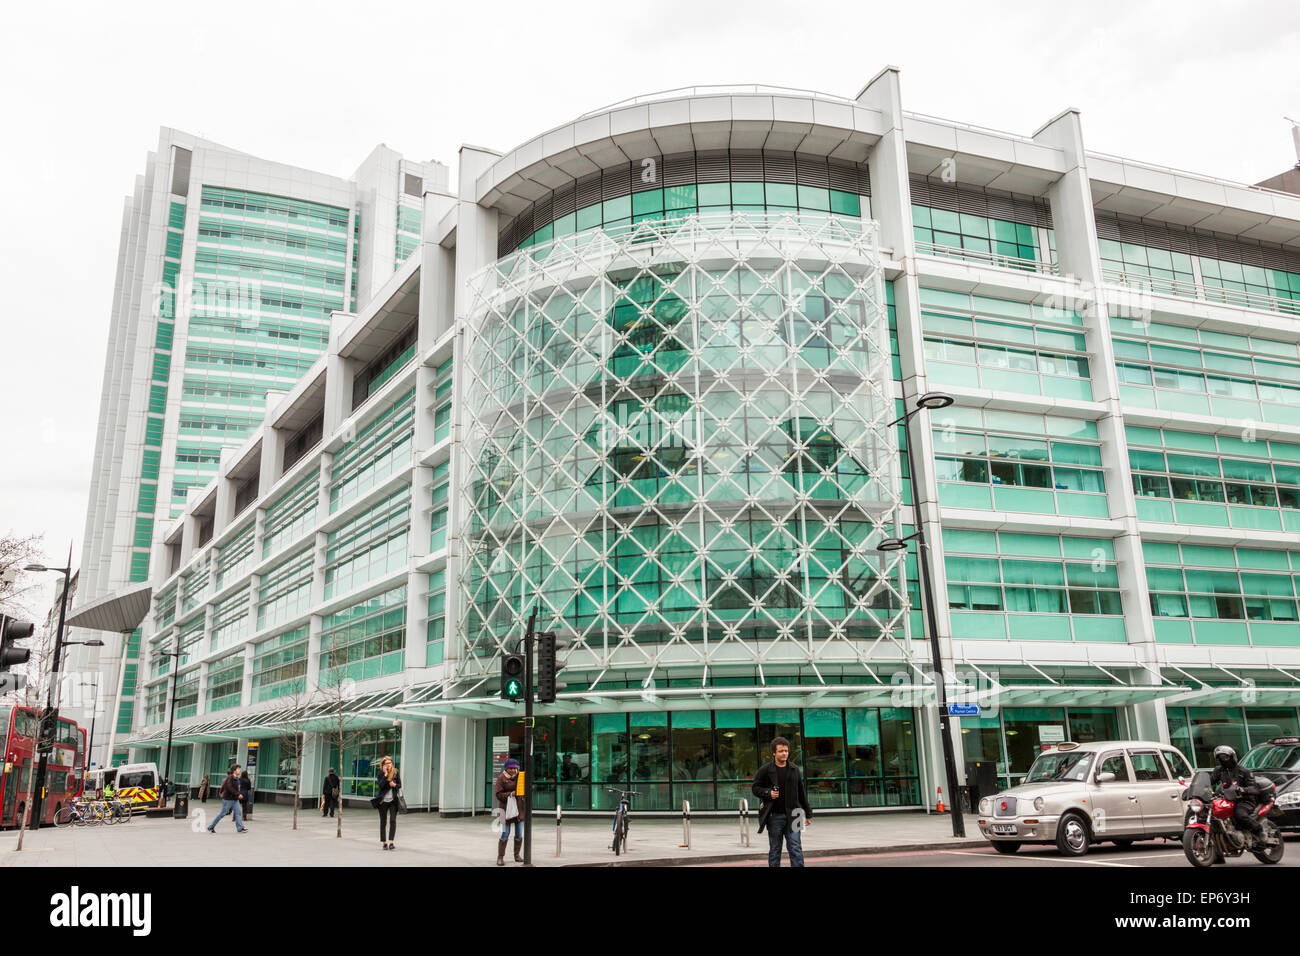 UCH, University College Hospital, London, England, UK Banque D'Images